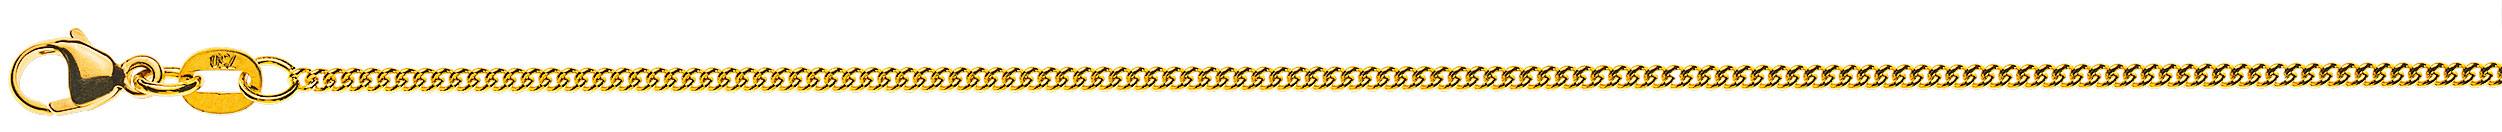 AURONOS Prestige Necklace yellow gold 18K round curb chain 45cm 1.6mm